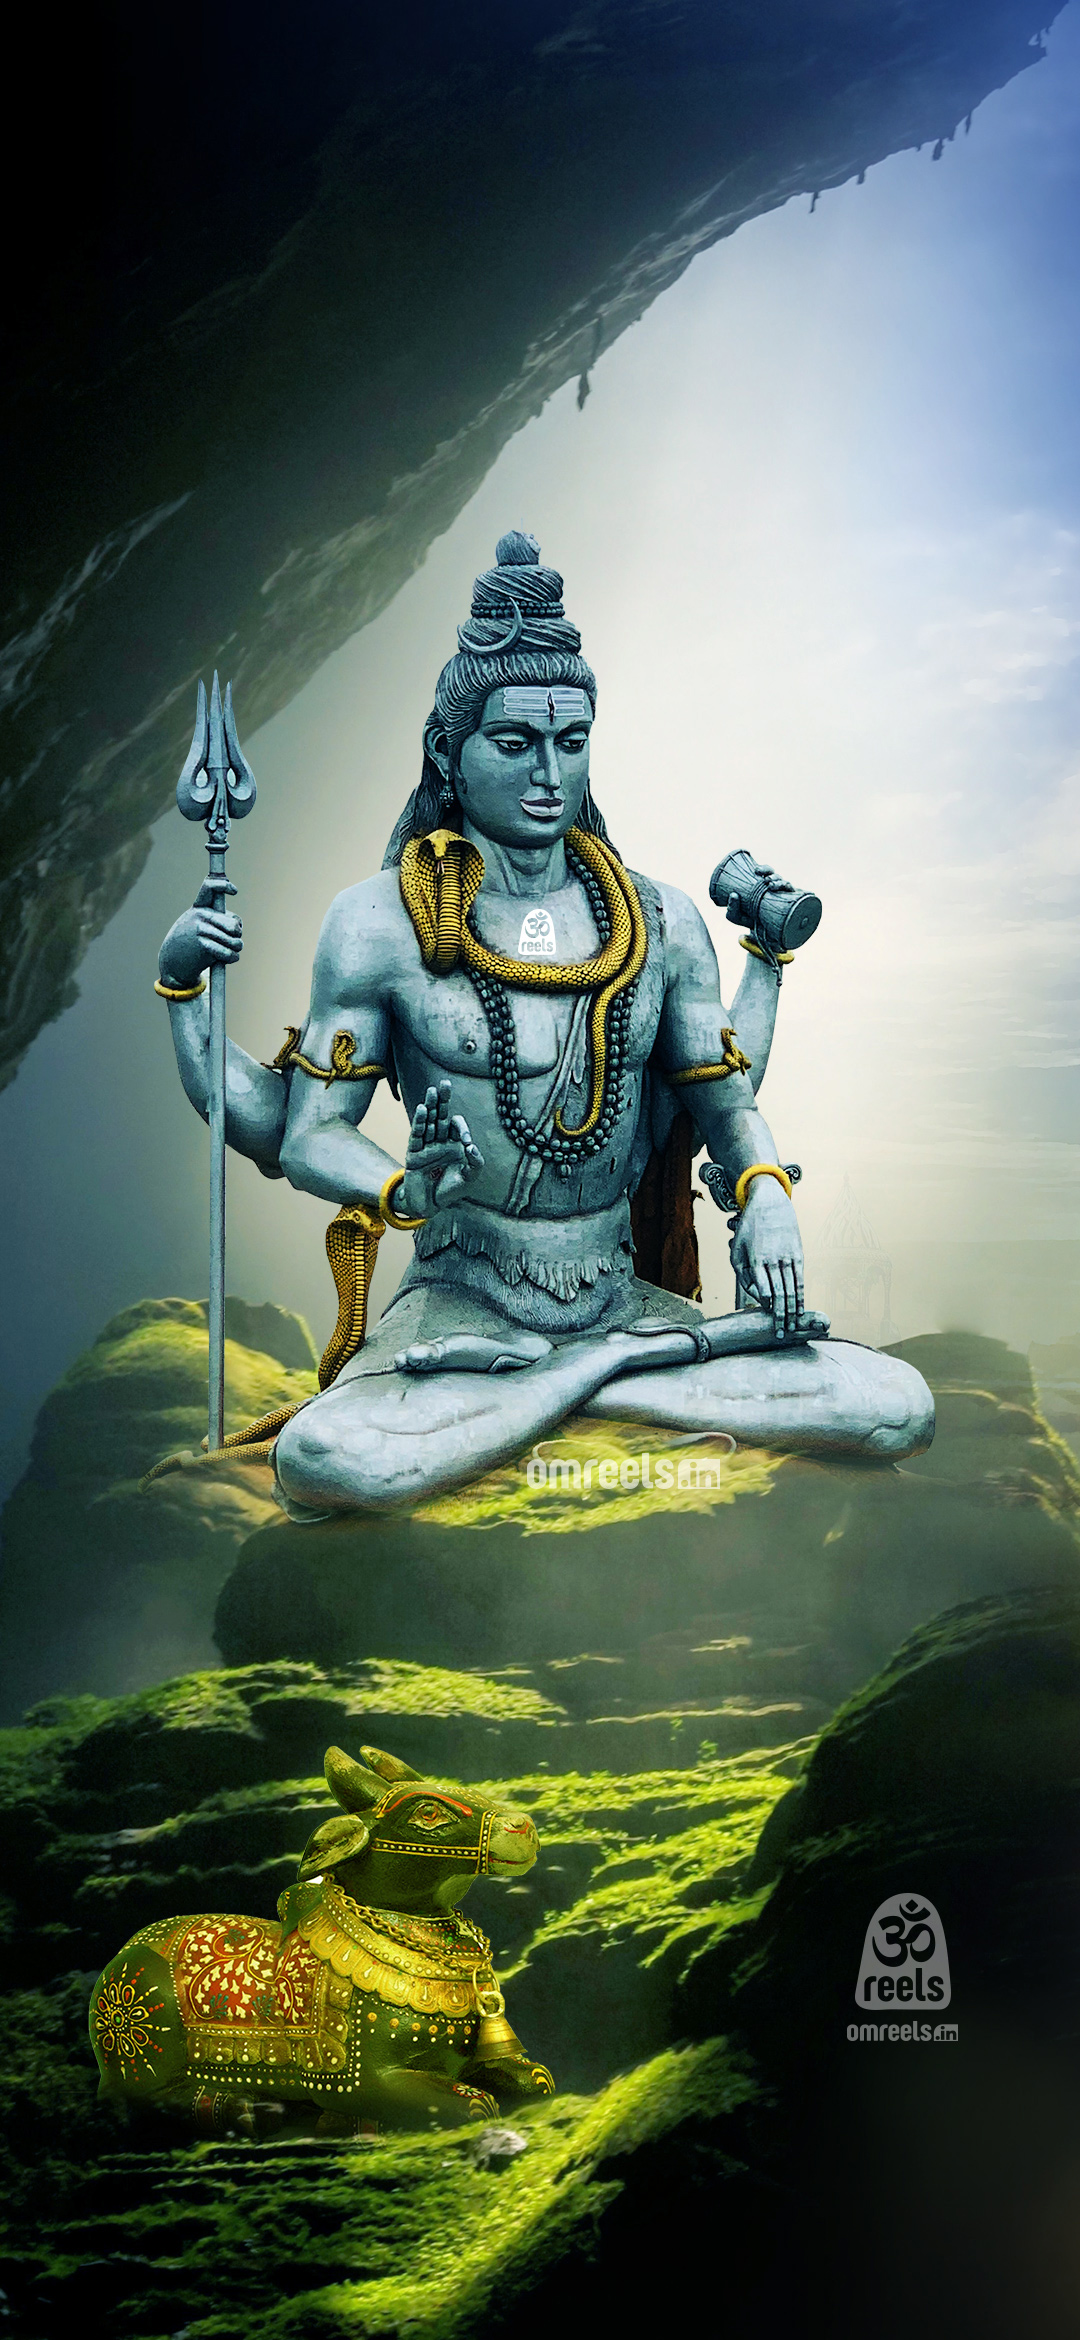 Free Download Lord Shiva HD Wallpapers - Om Reels